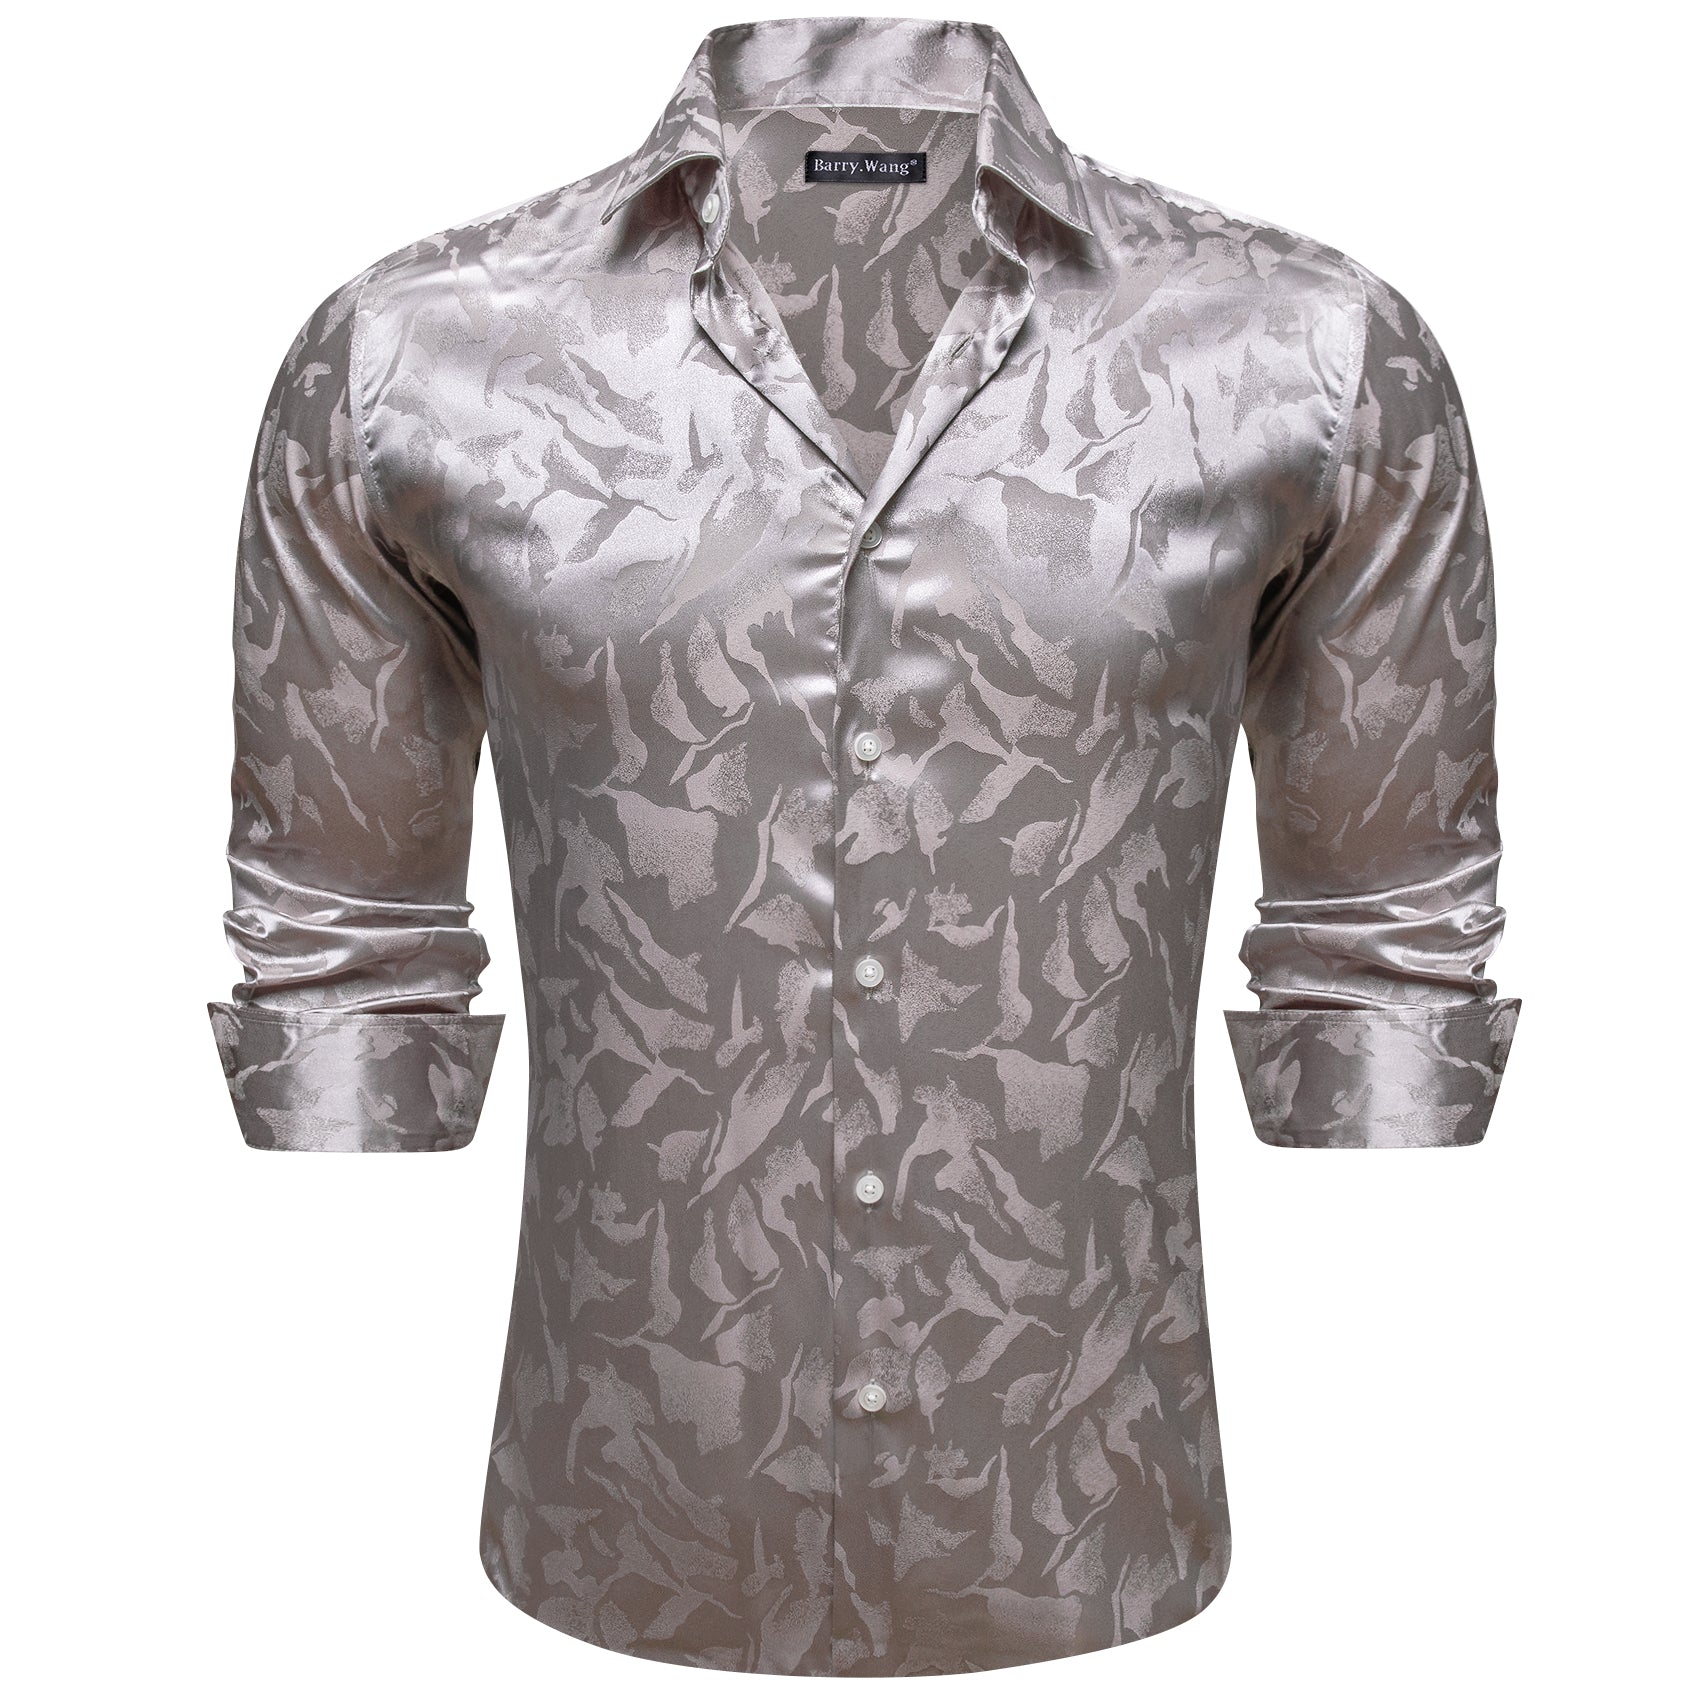 Barry.wang Grey Floral Silk Men's Shirt